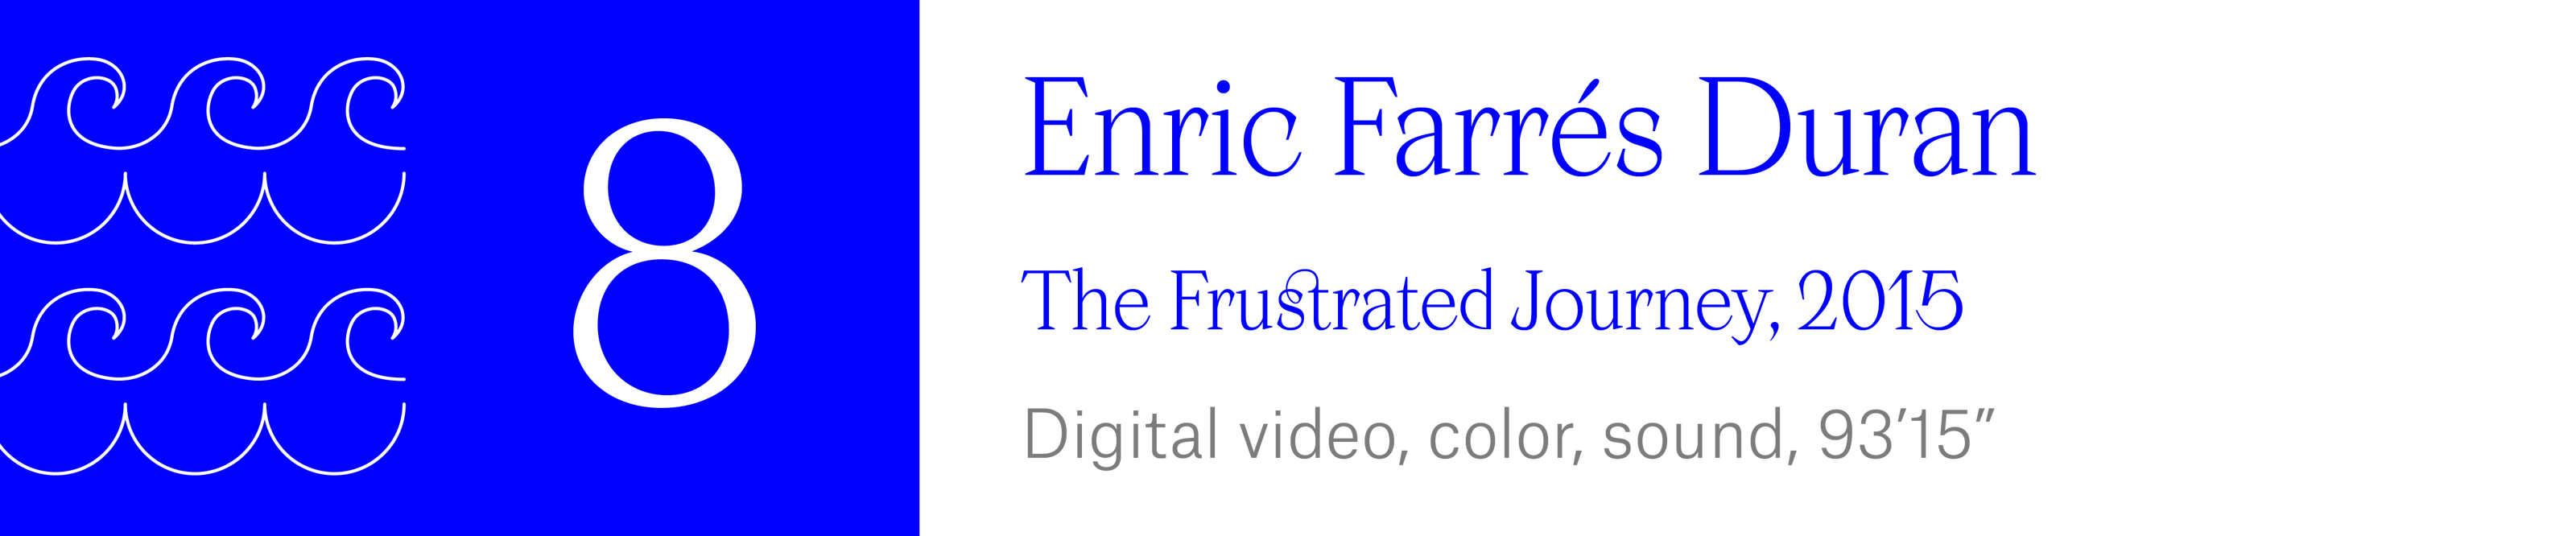 The Wave - (8). Enric Farrés Duran - A Frustrated Journey, 2015. Digital video, color, sound, 93 minutes, 15 seconds.